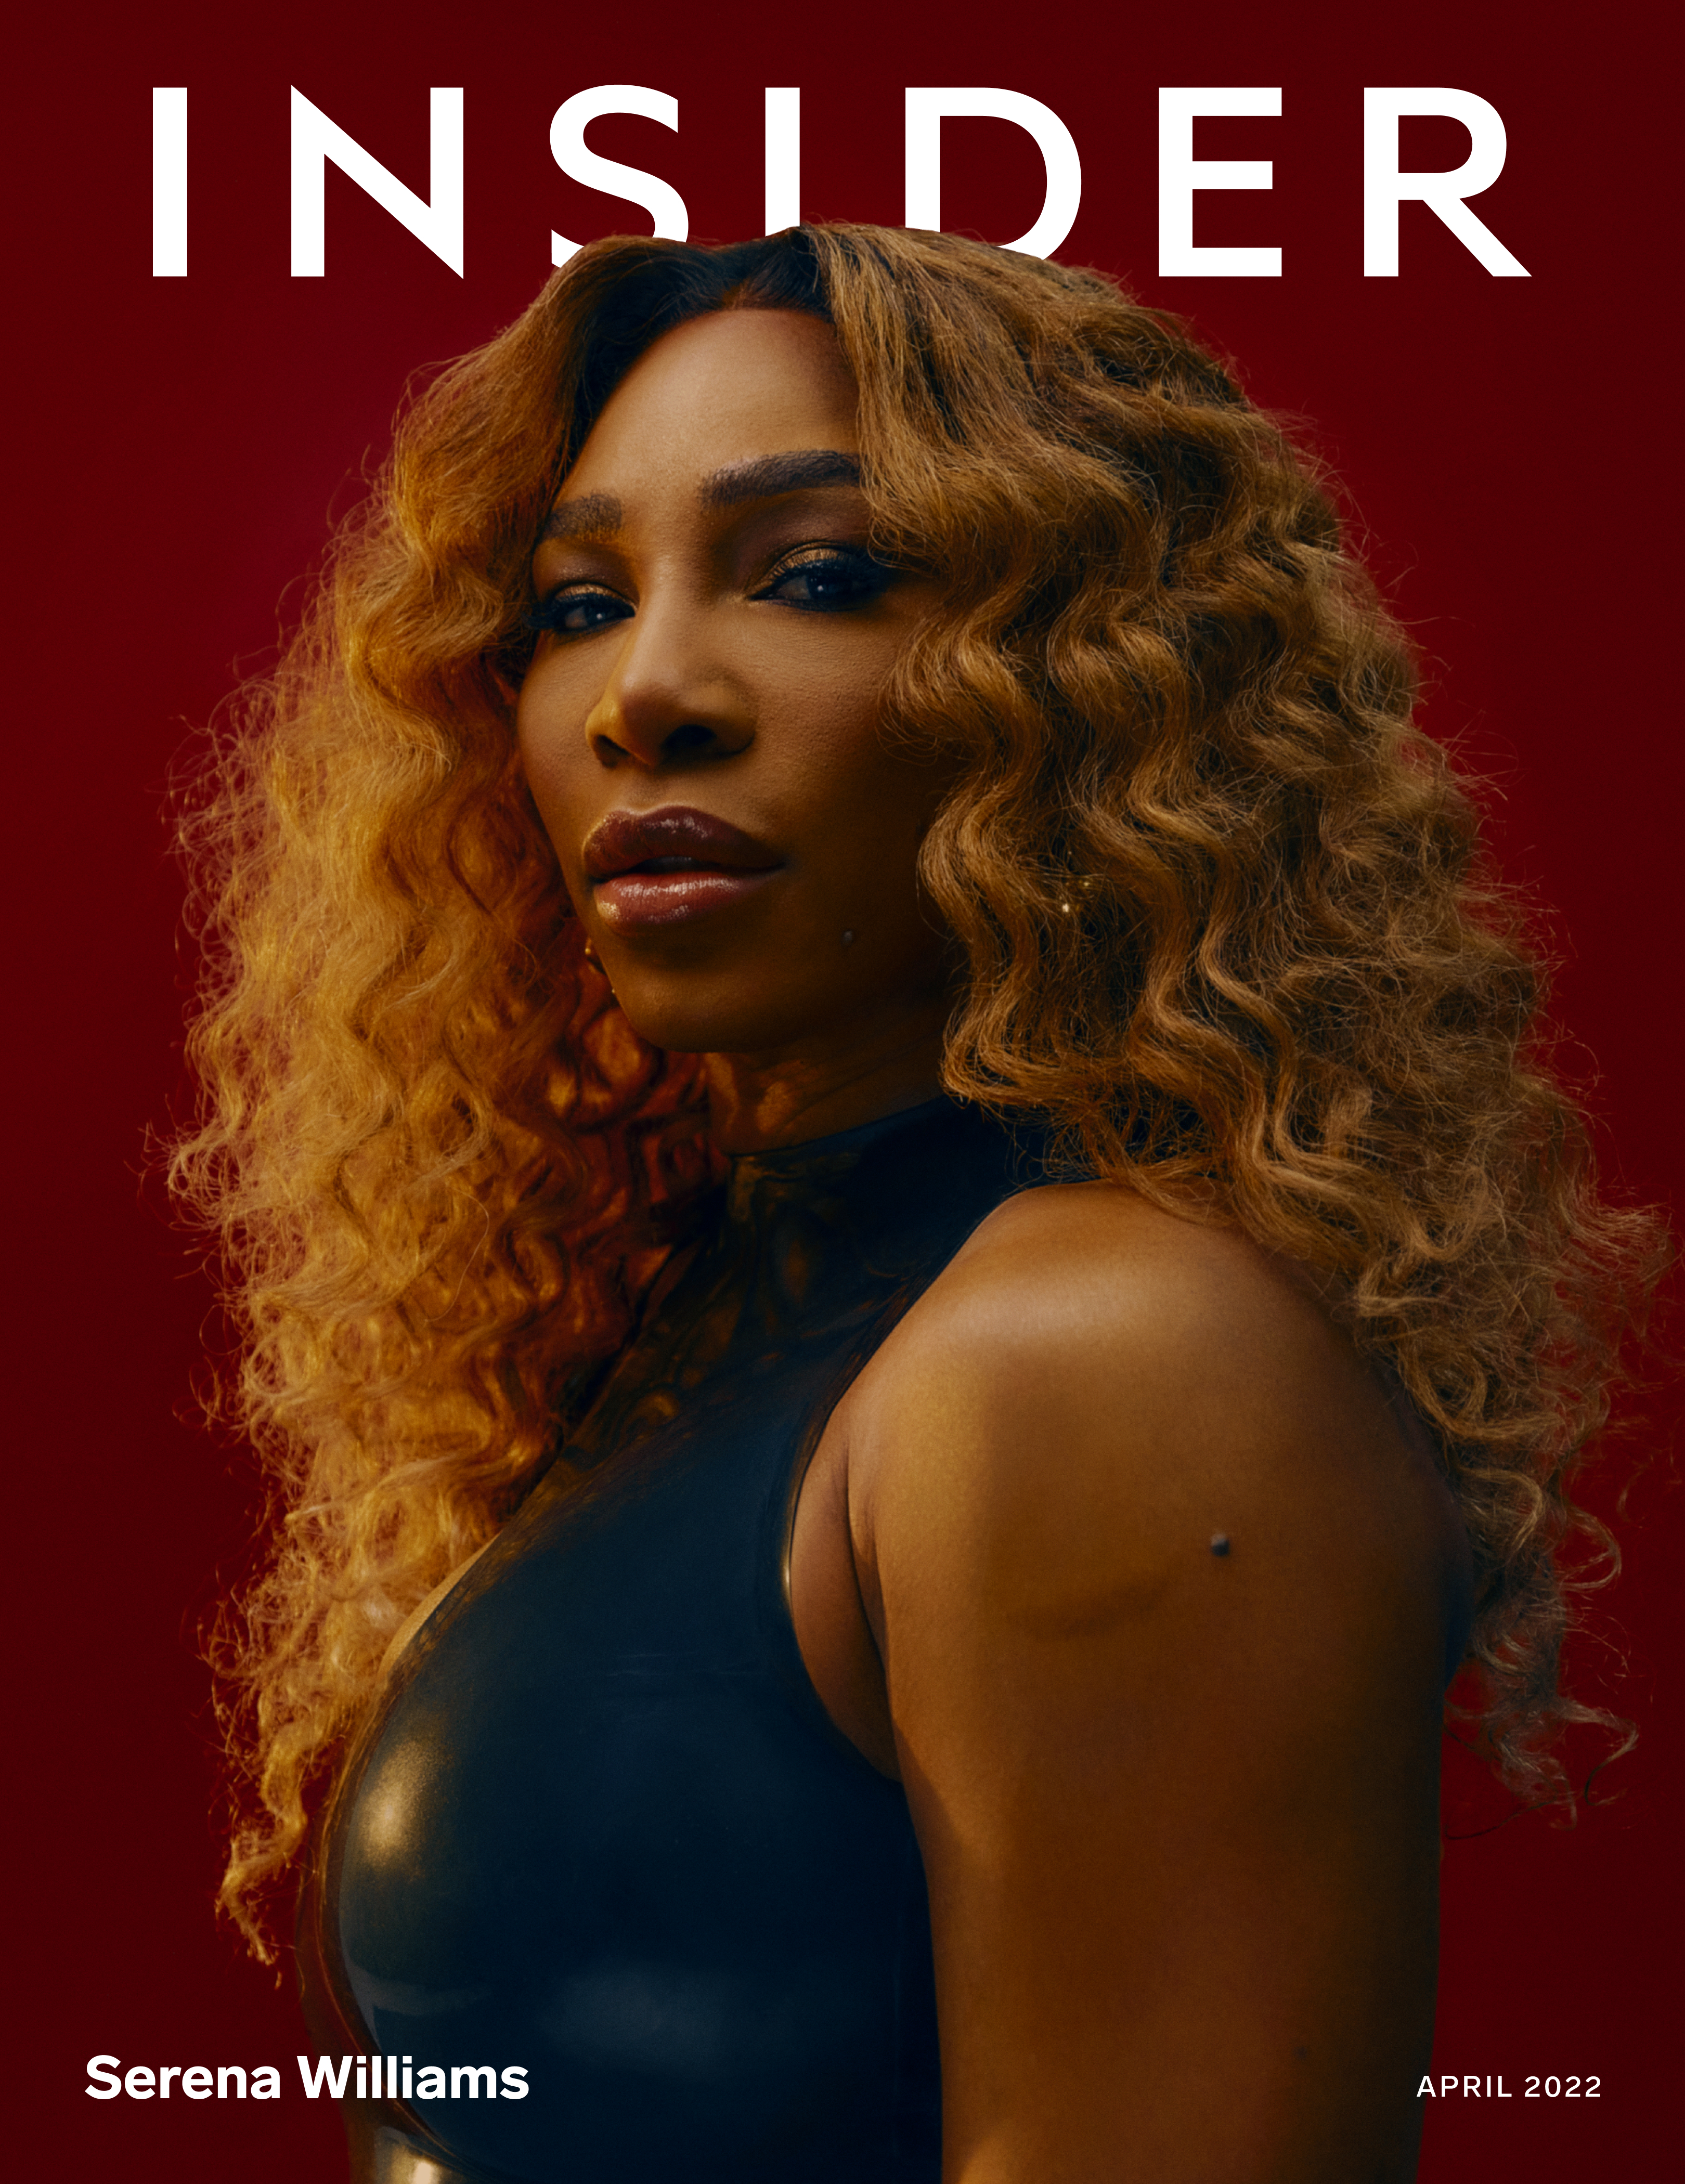 Insider “Serena Williams” April 2022